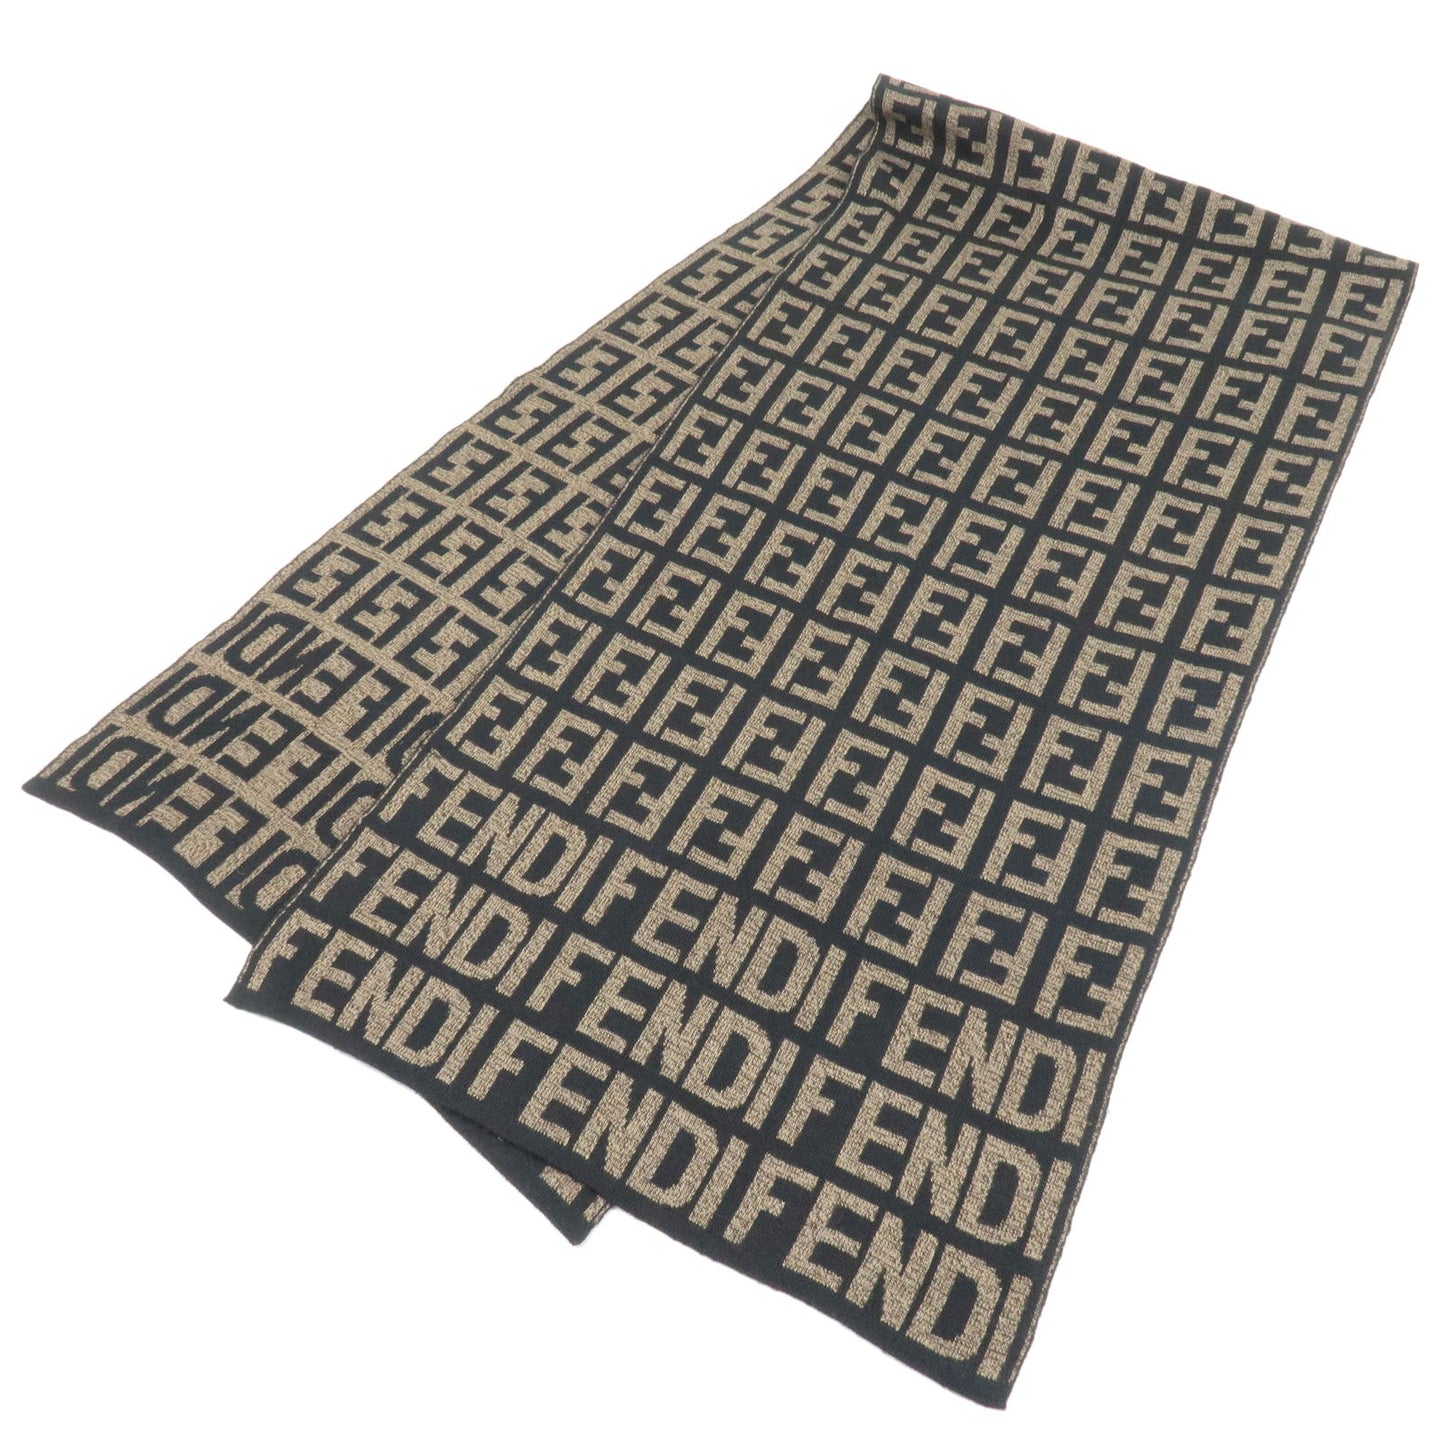 FENDI-Zucca-Print-Knit-Scarf-Brown-Black